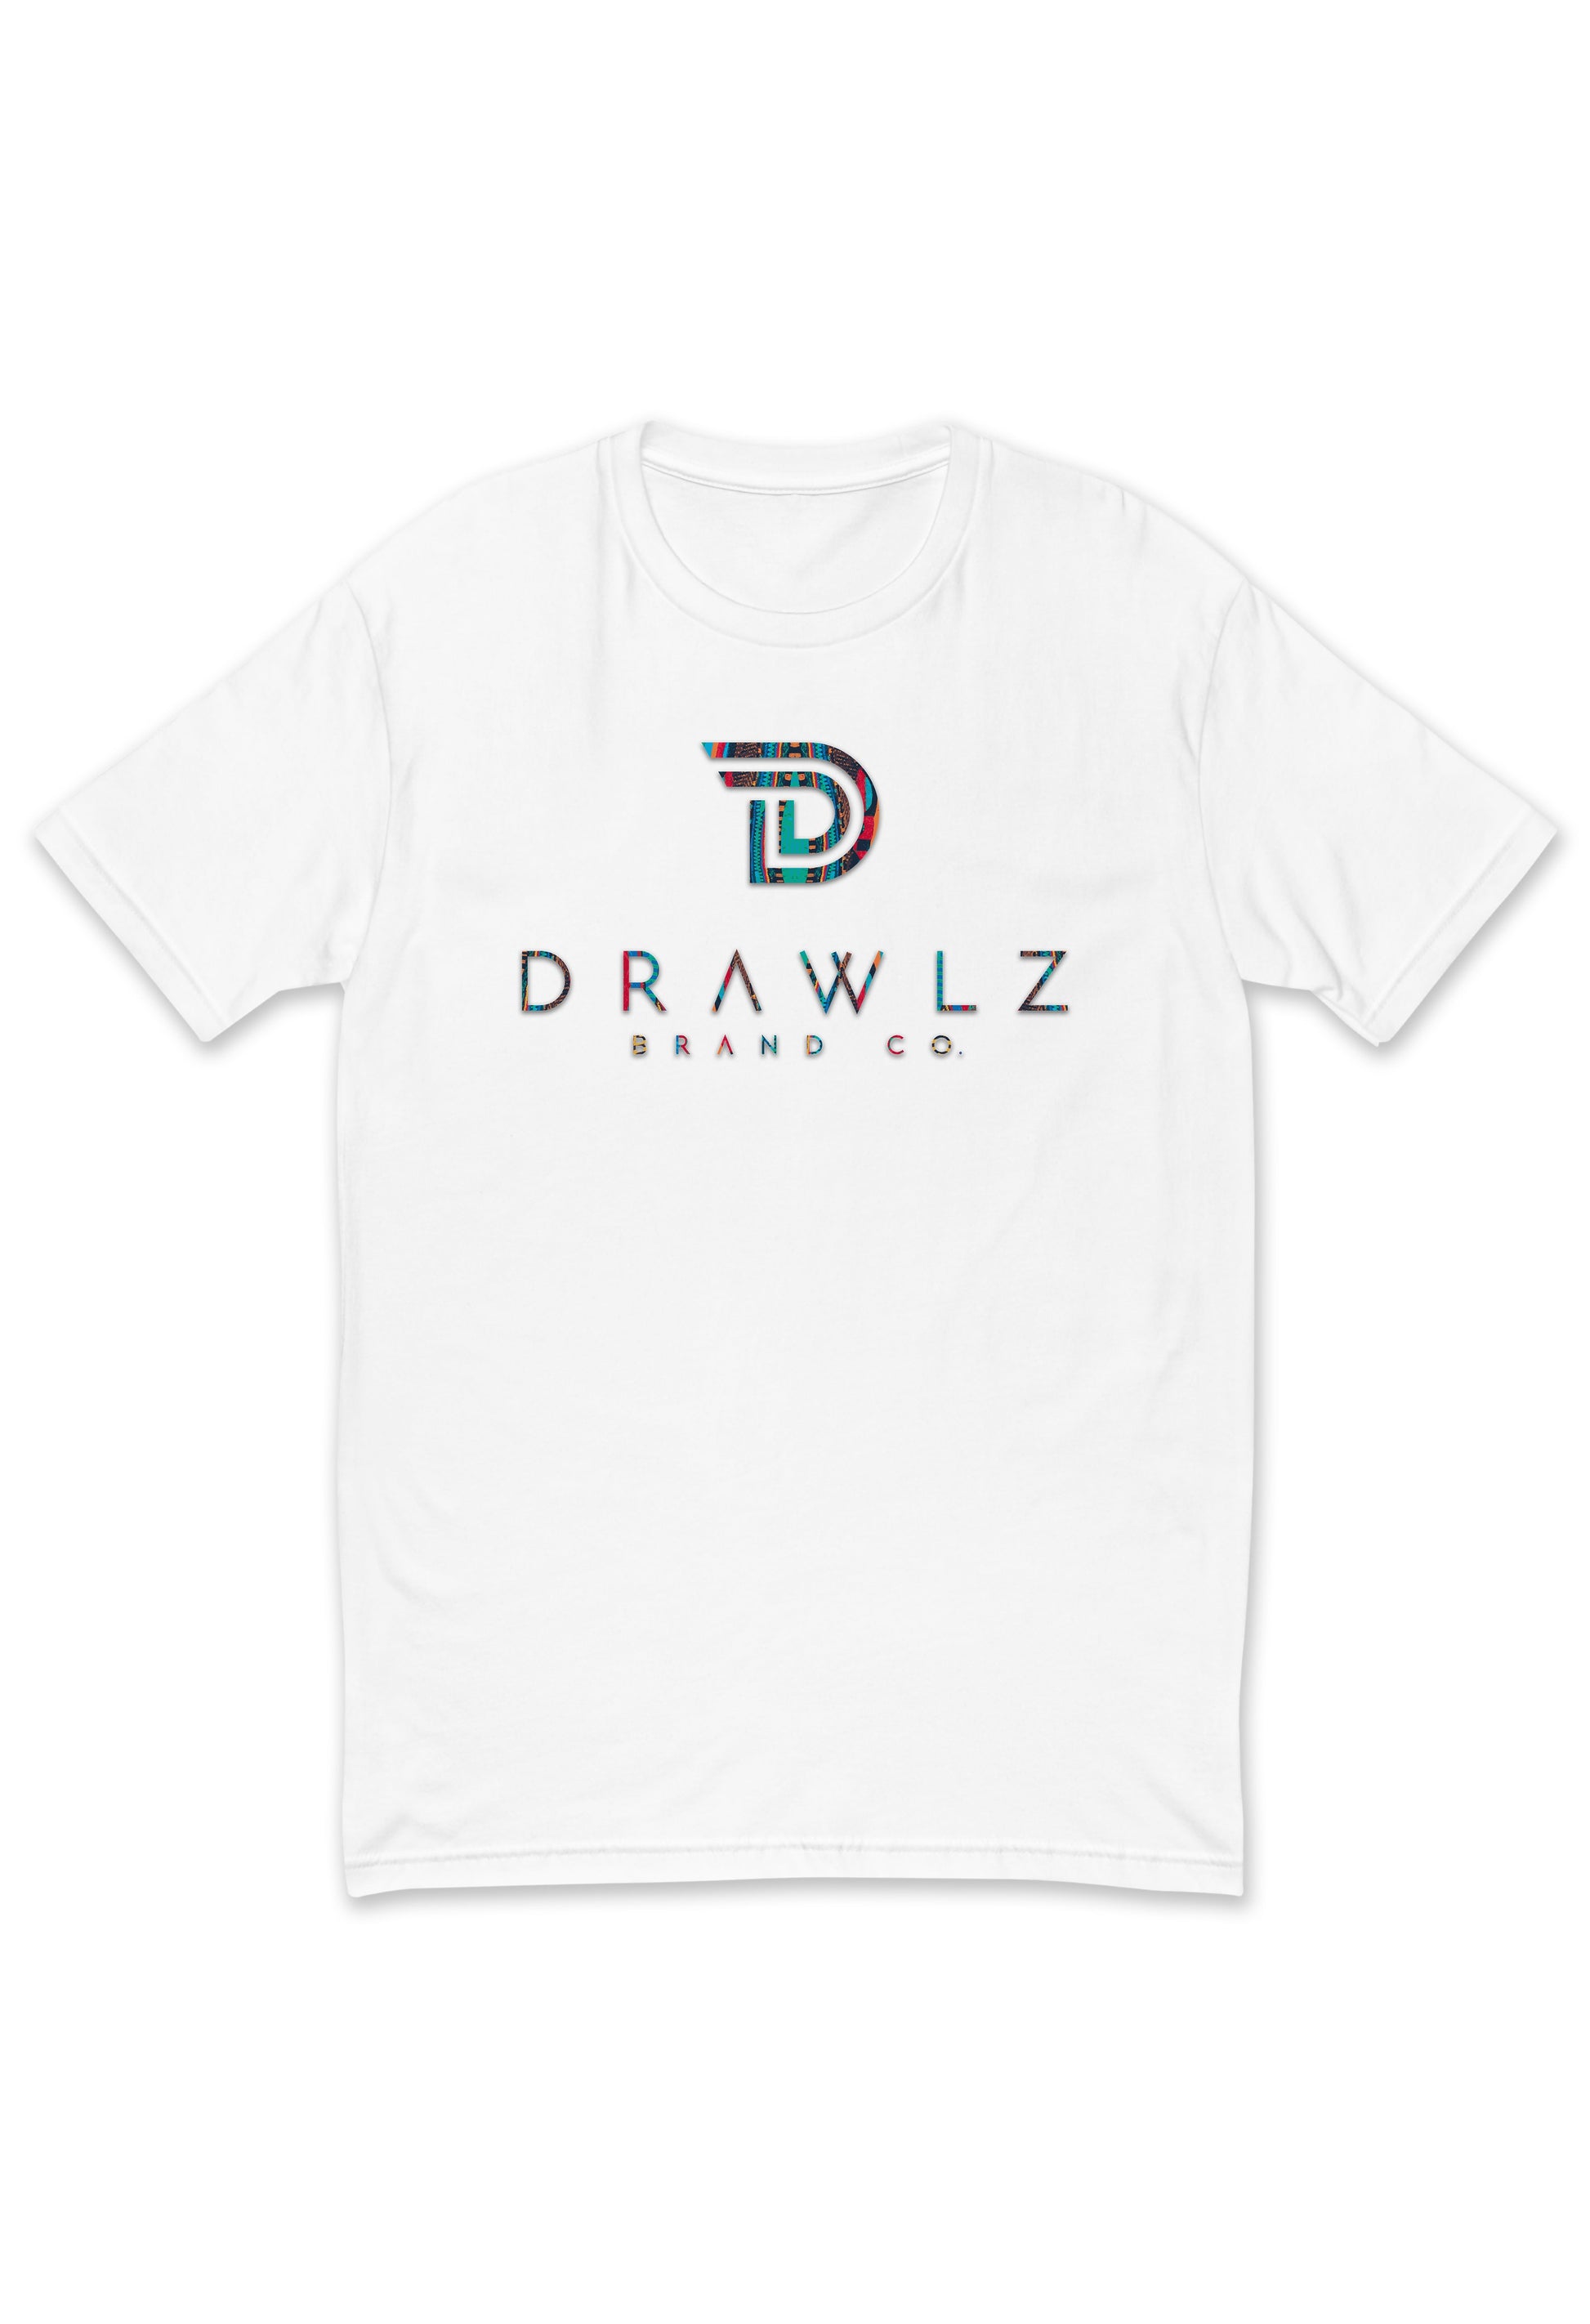 The "B.I.G" Pack Drawlz Brand Co. , LLC